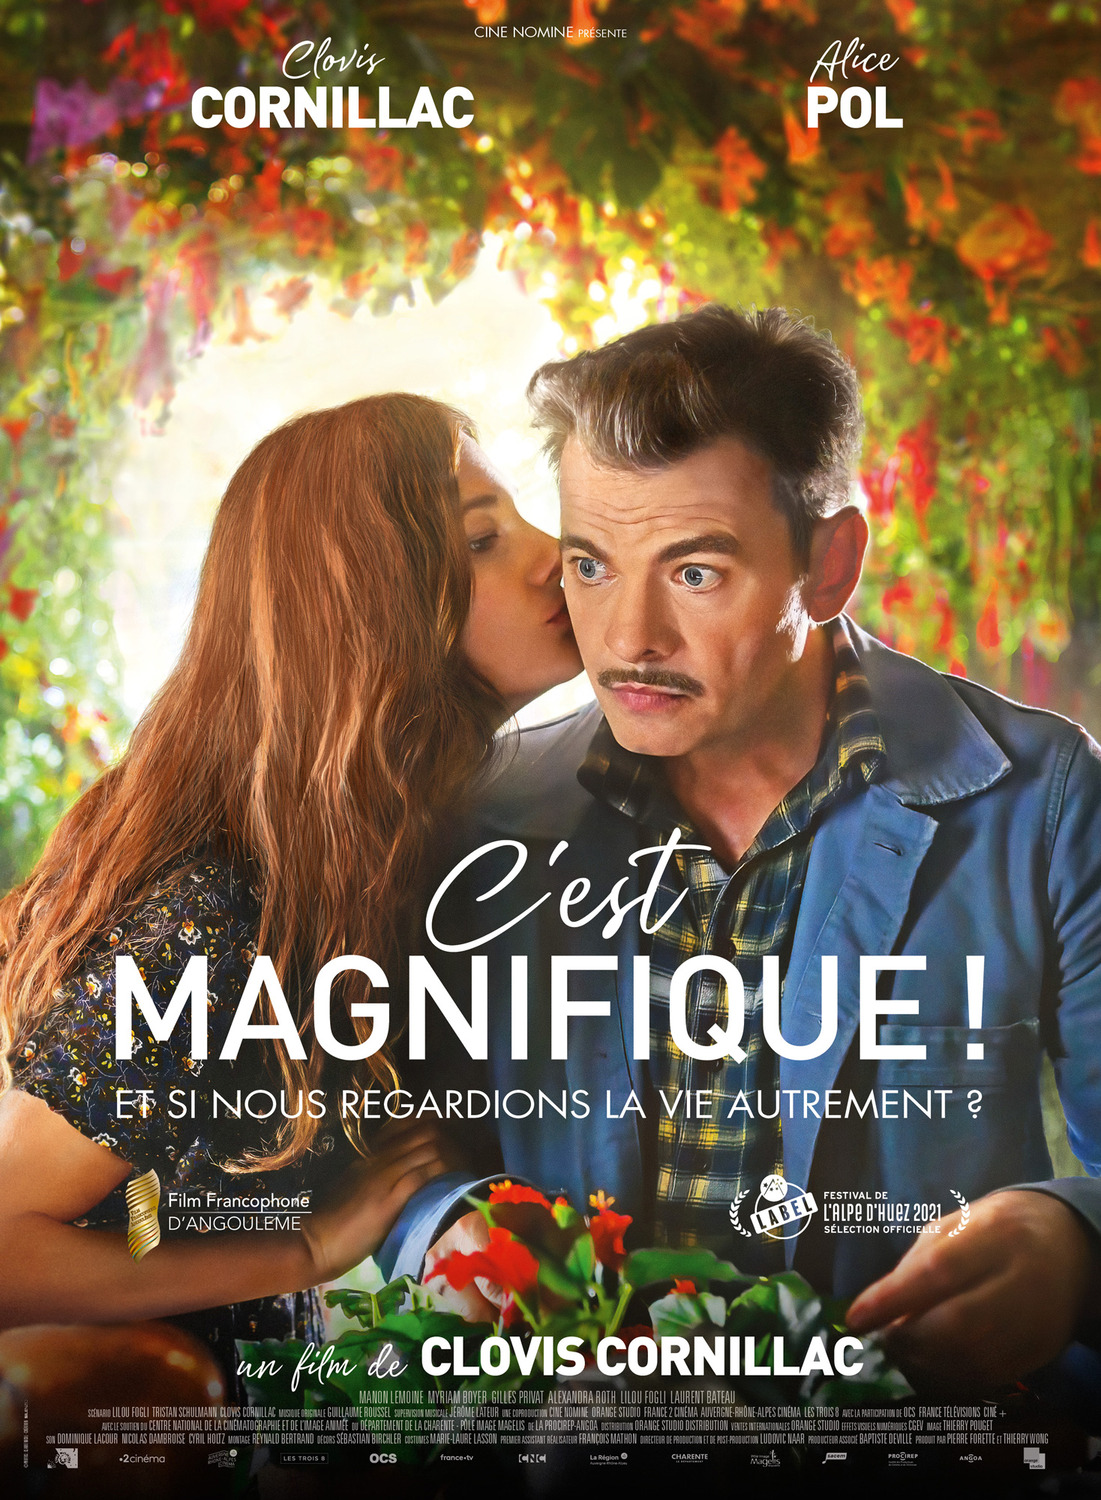 Extra Large Movie Poster Image for C'est magnifique! 